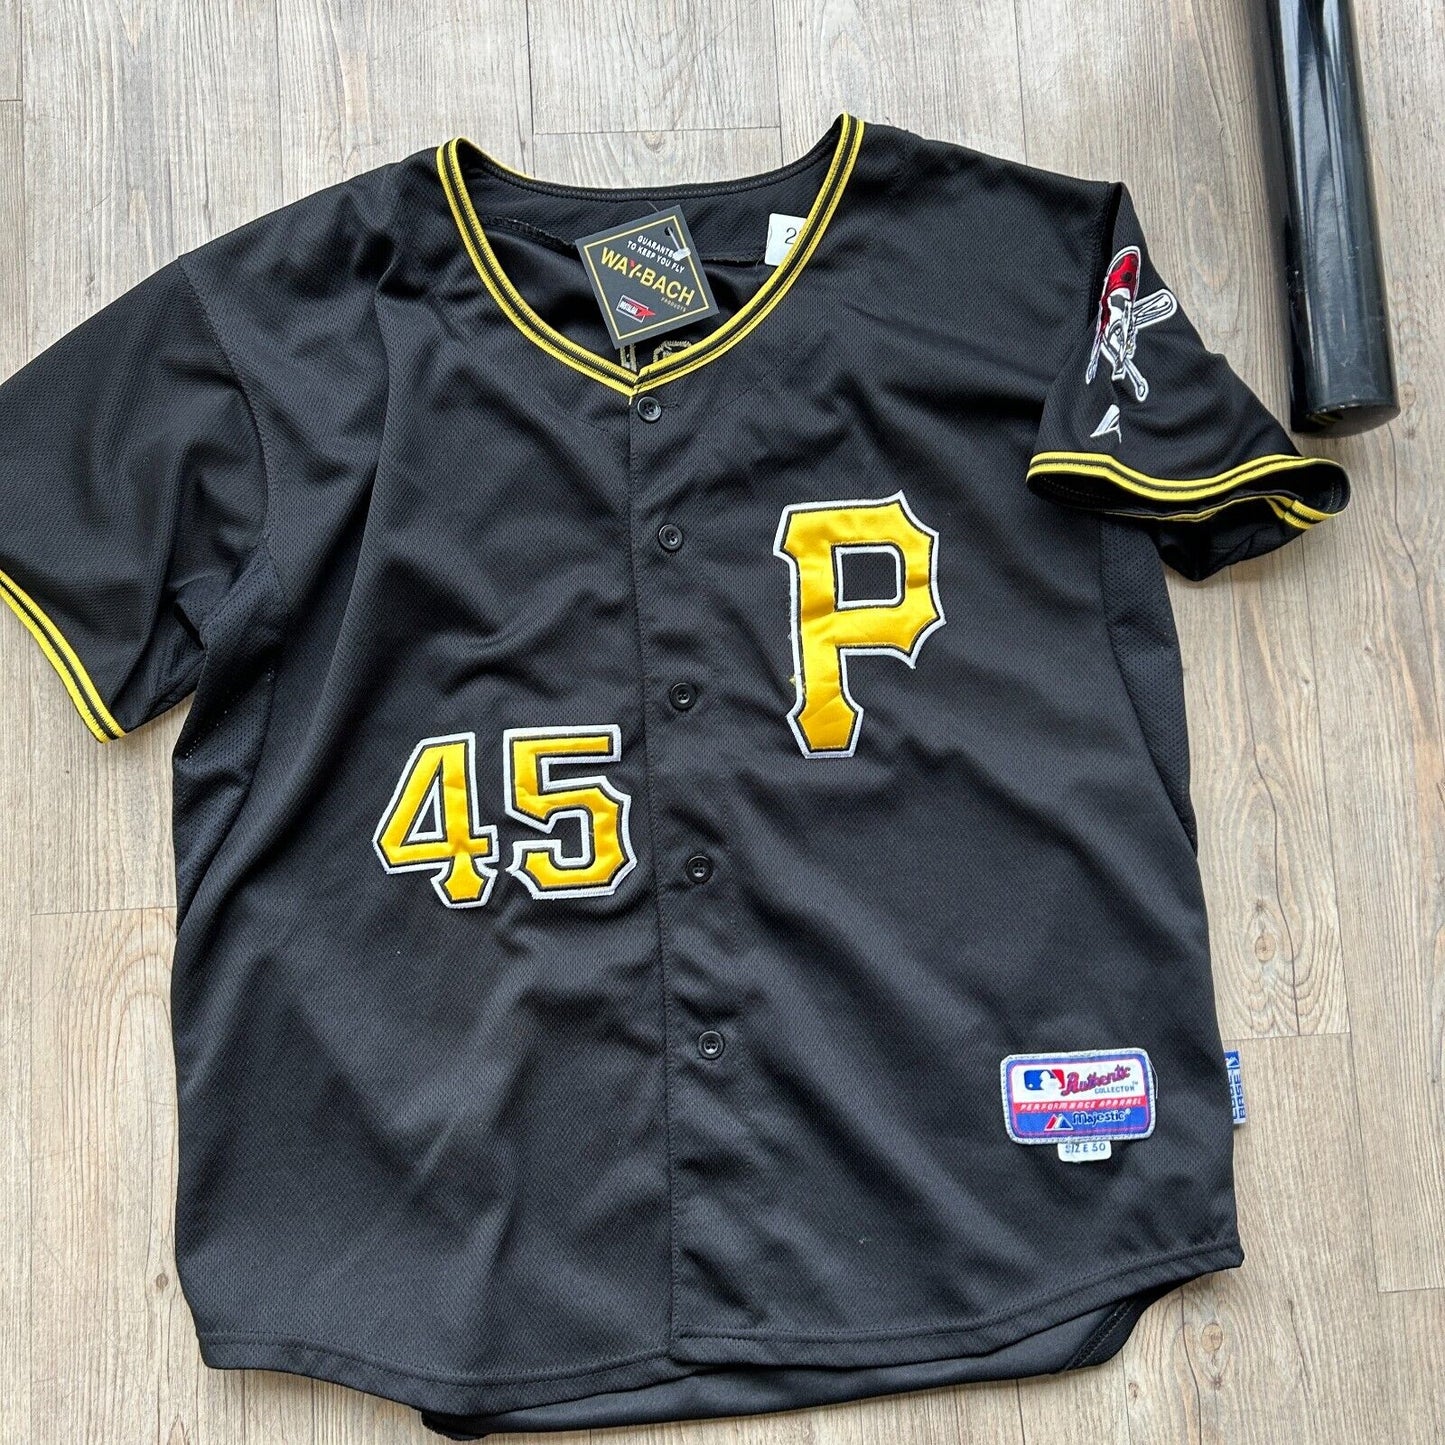 VINTAGE | MLB Pittsburgh Pirates #45 Baseball Majestic Jersey sz L/XL Adult